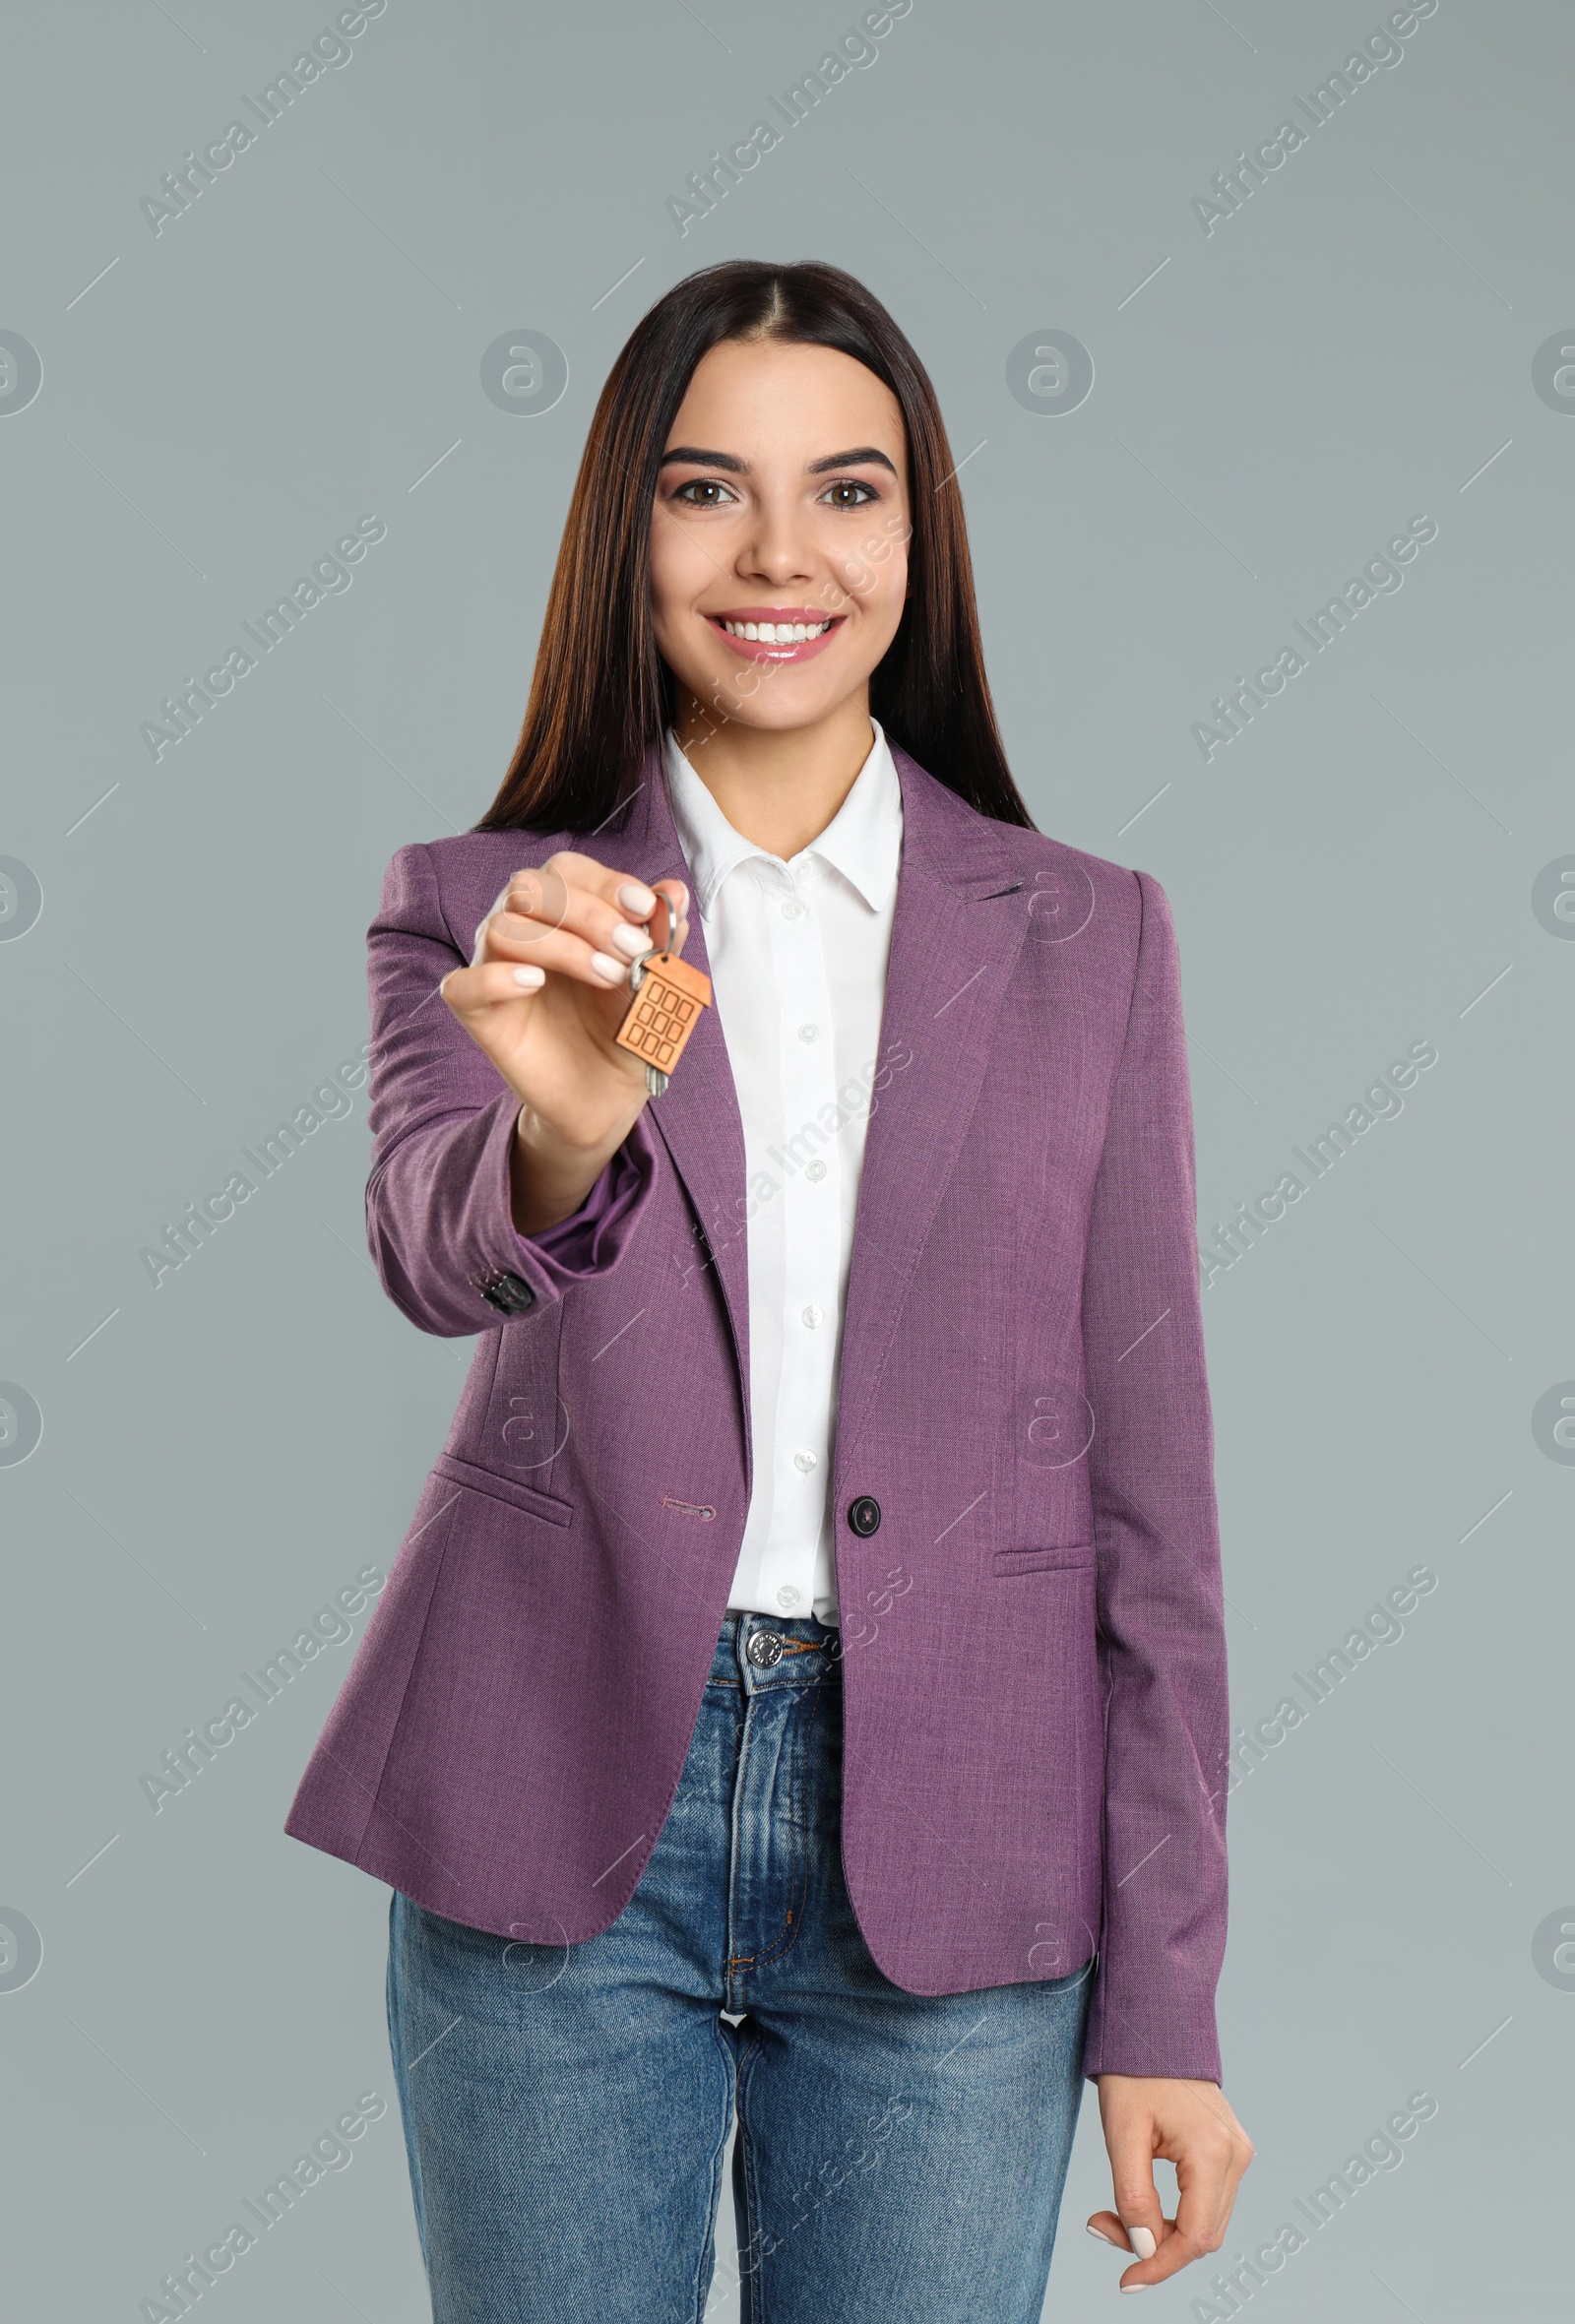 Photo of Female real estate agent holding key on grey background